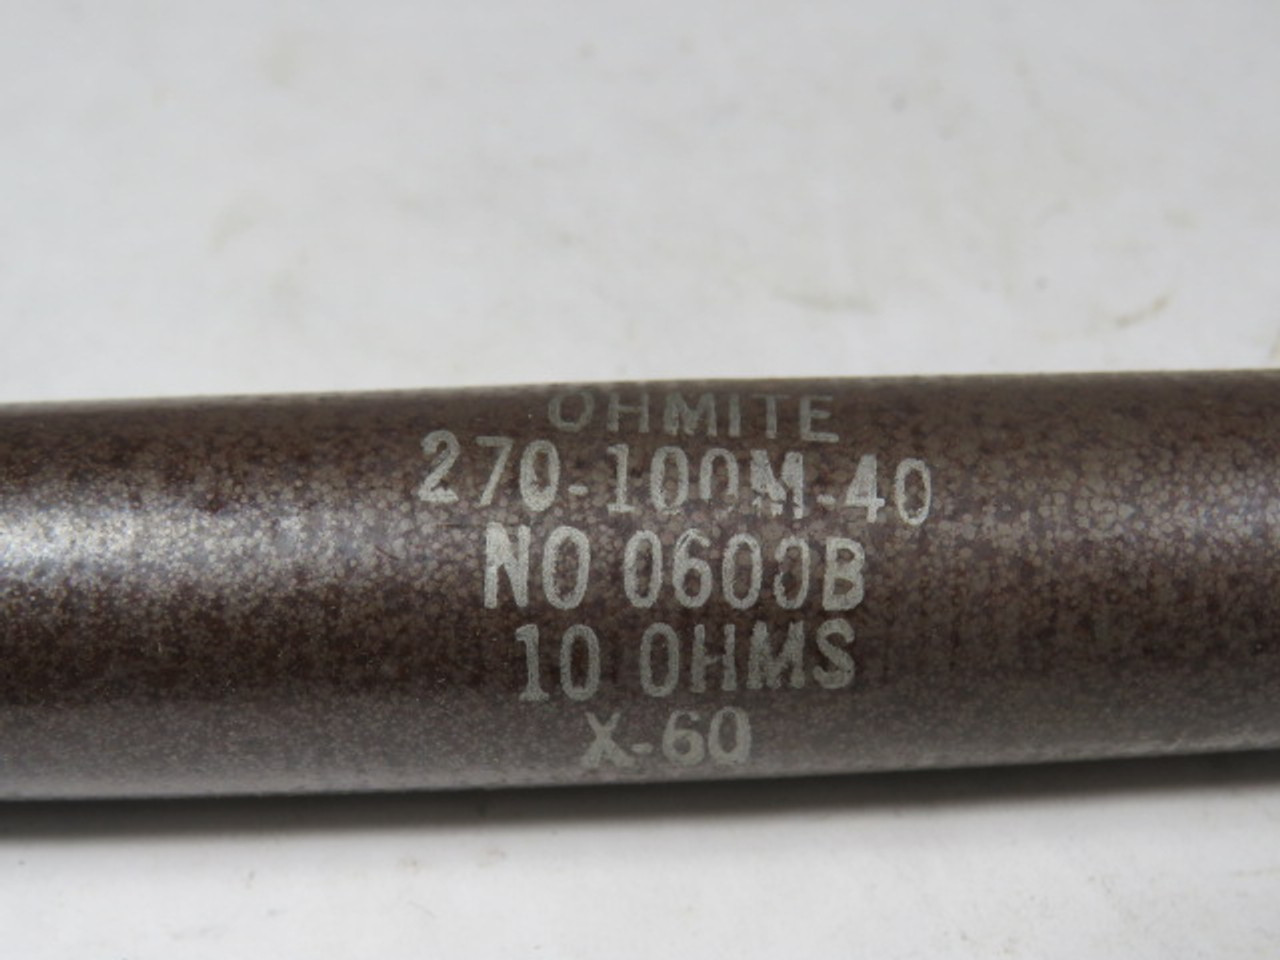 Ohmite 0600B 270-100M-40 Resistor 10 Ohms USED